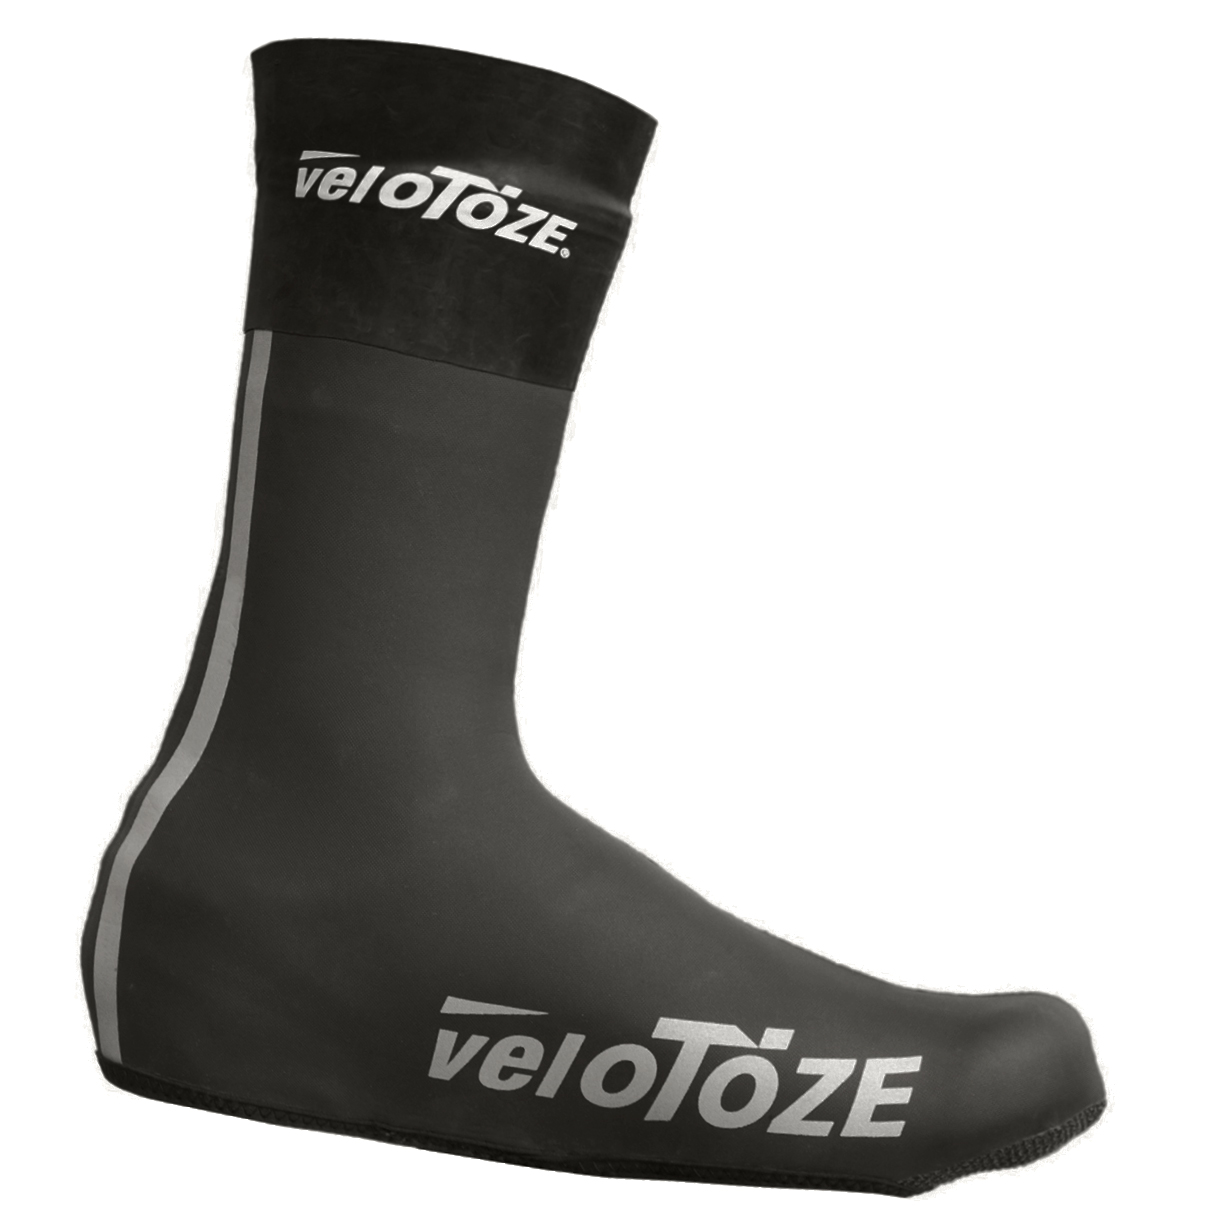 Productfoto van veloToze Neoprene Shoe Cover - black